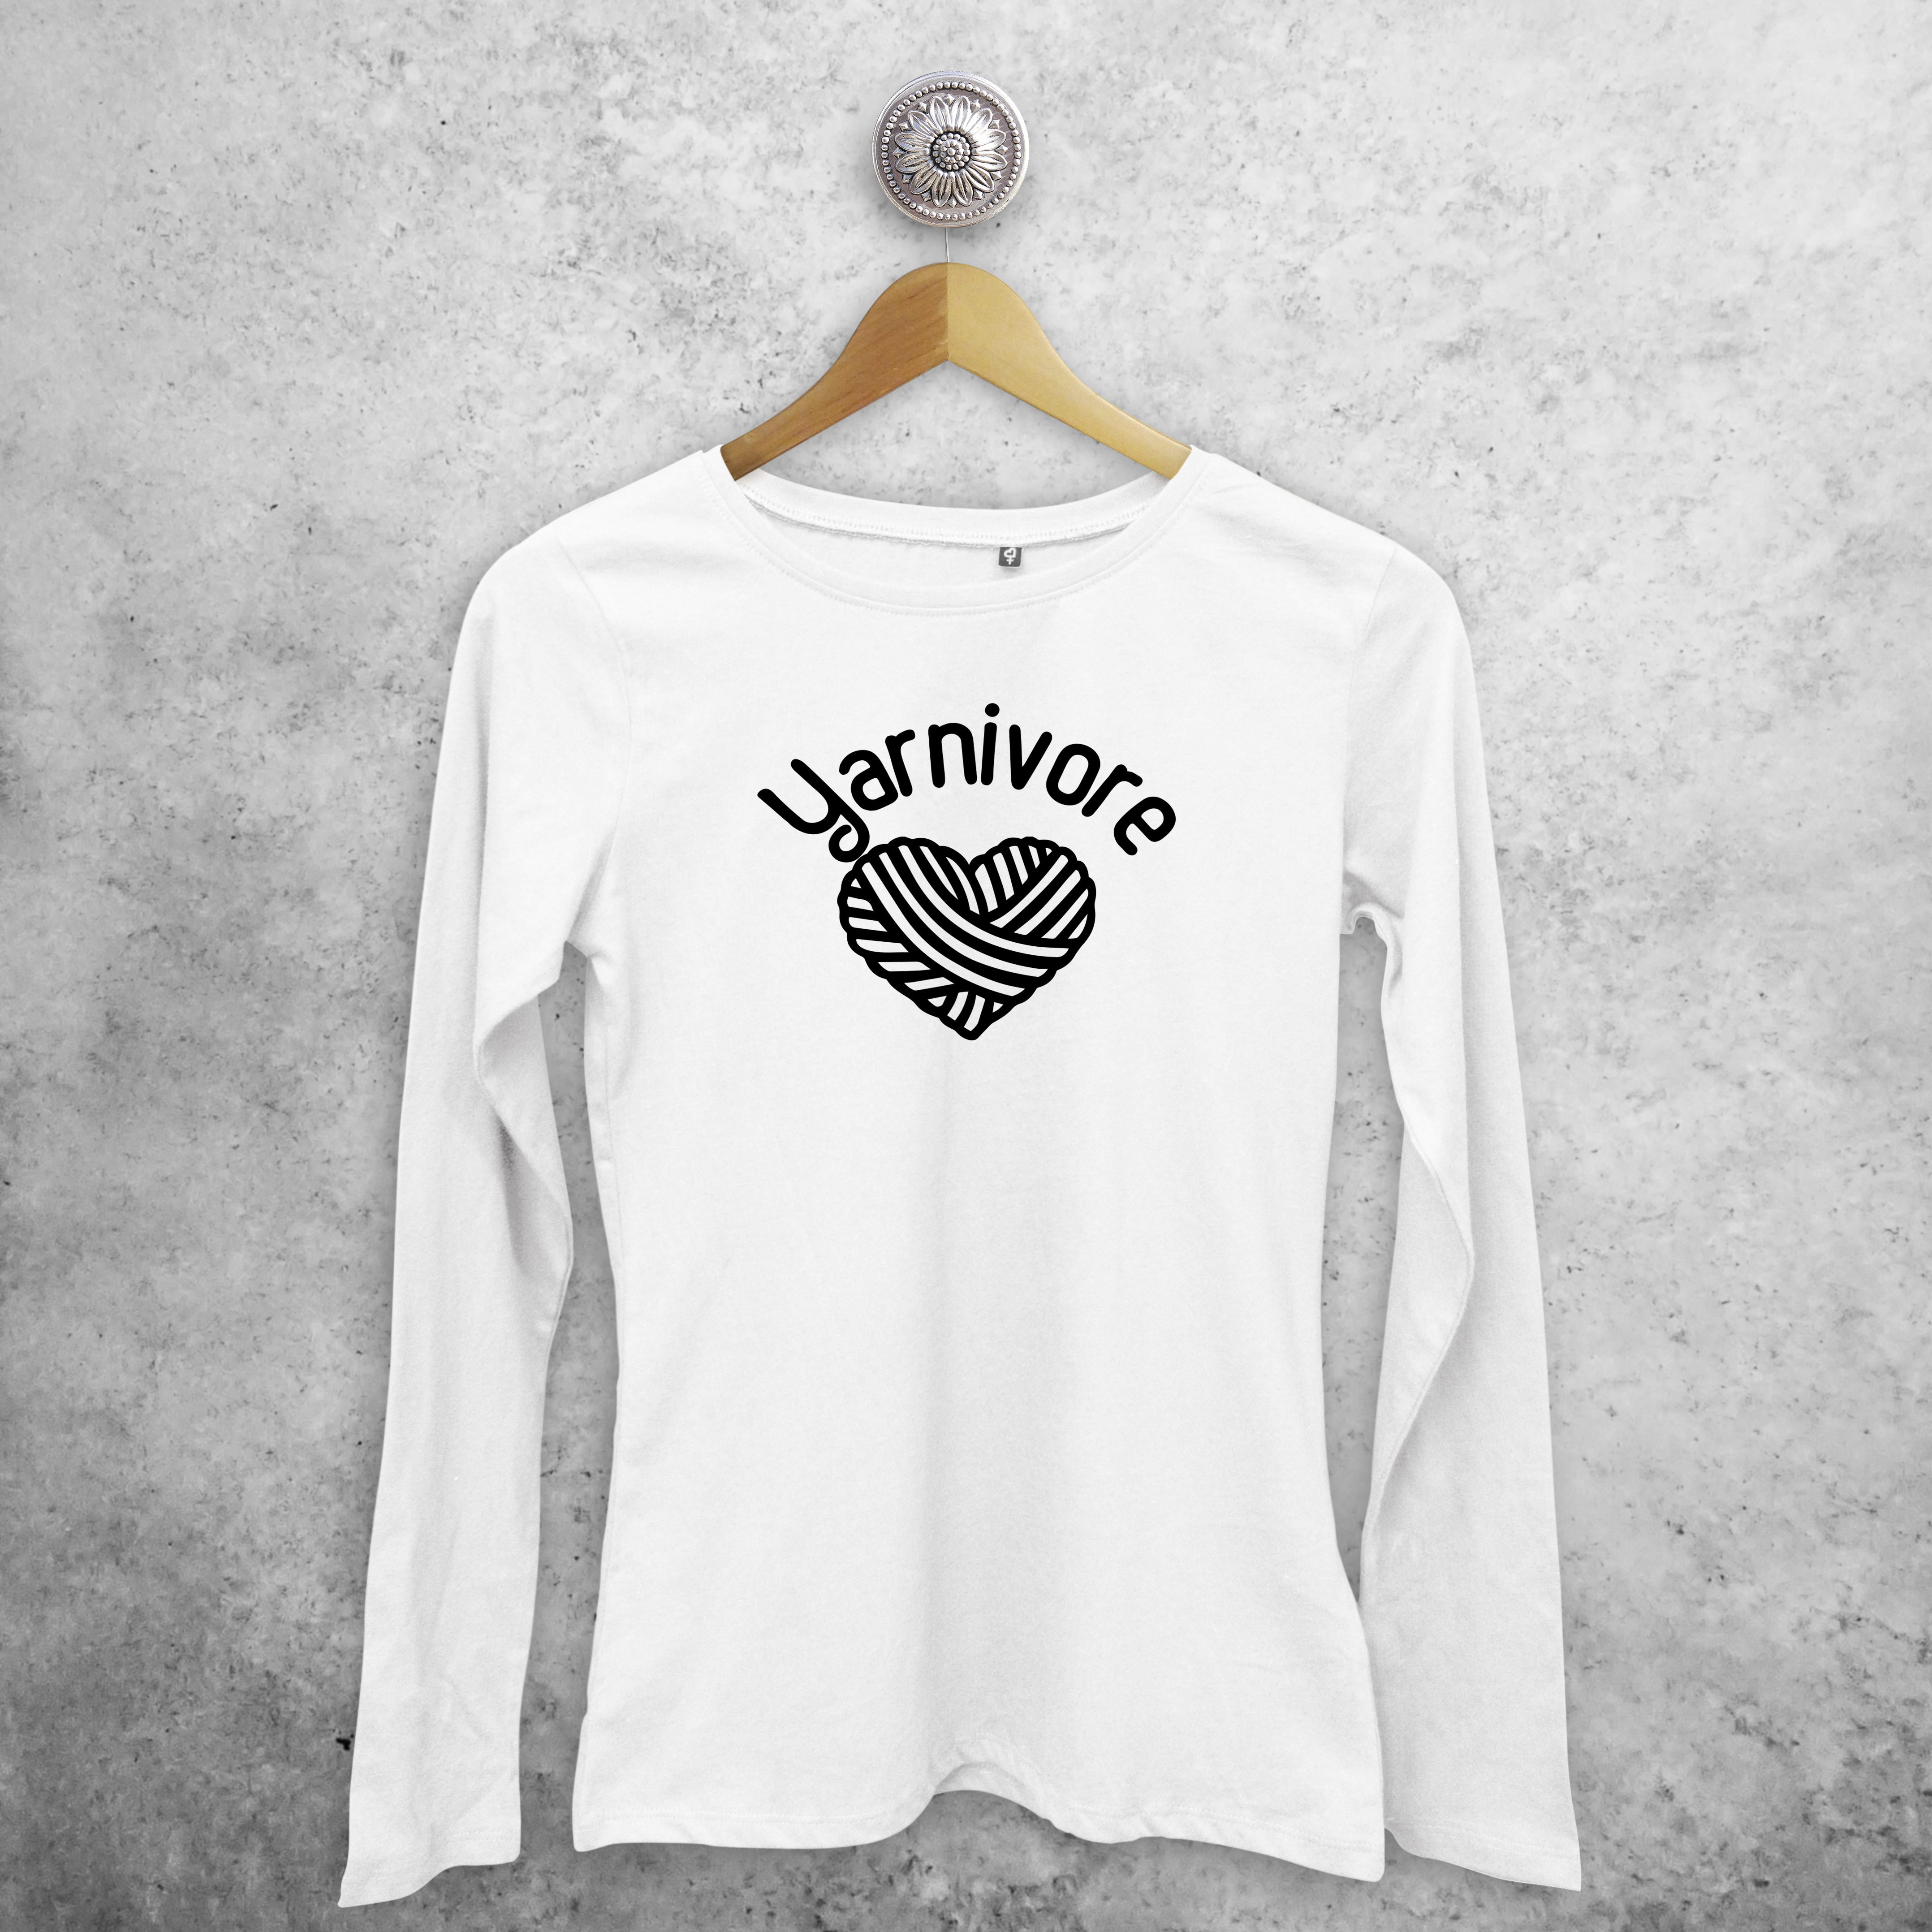 'Yarnivore' volassene shirt met lange mouwen